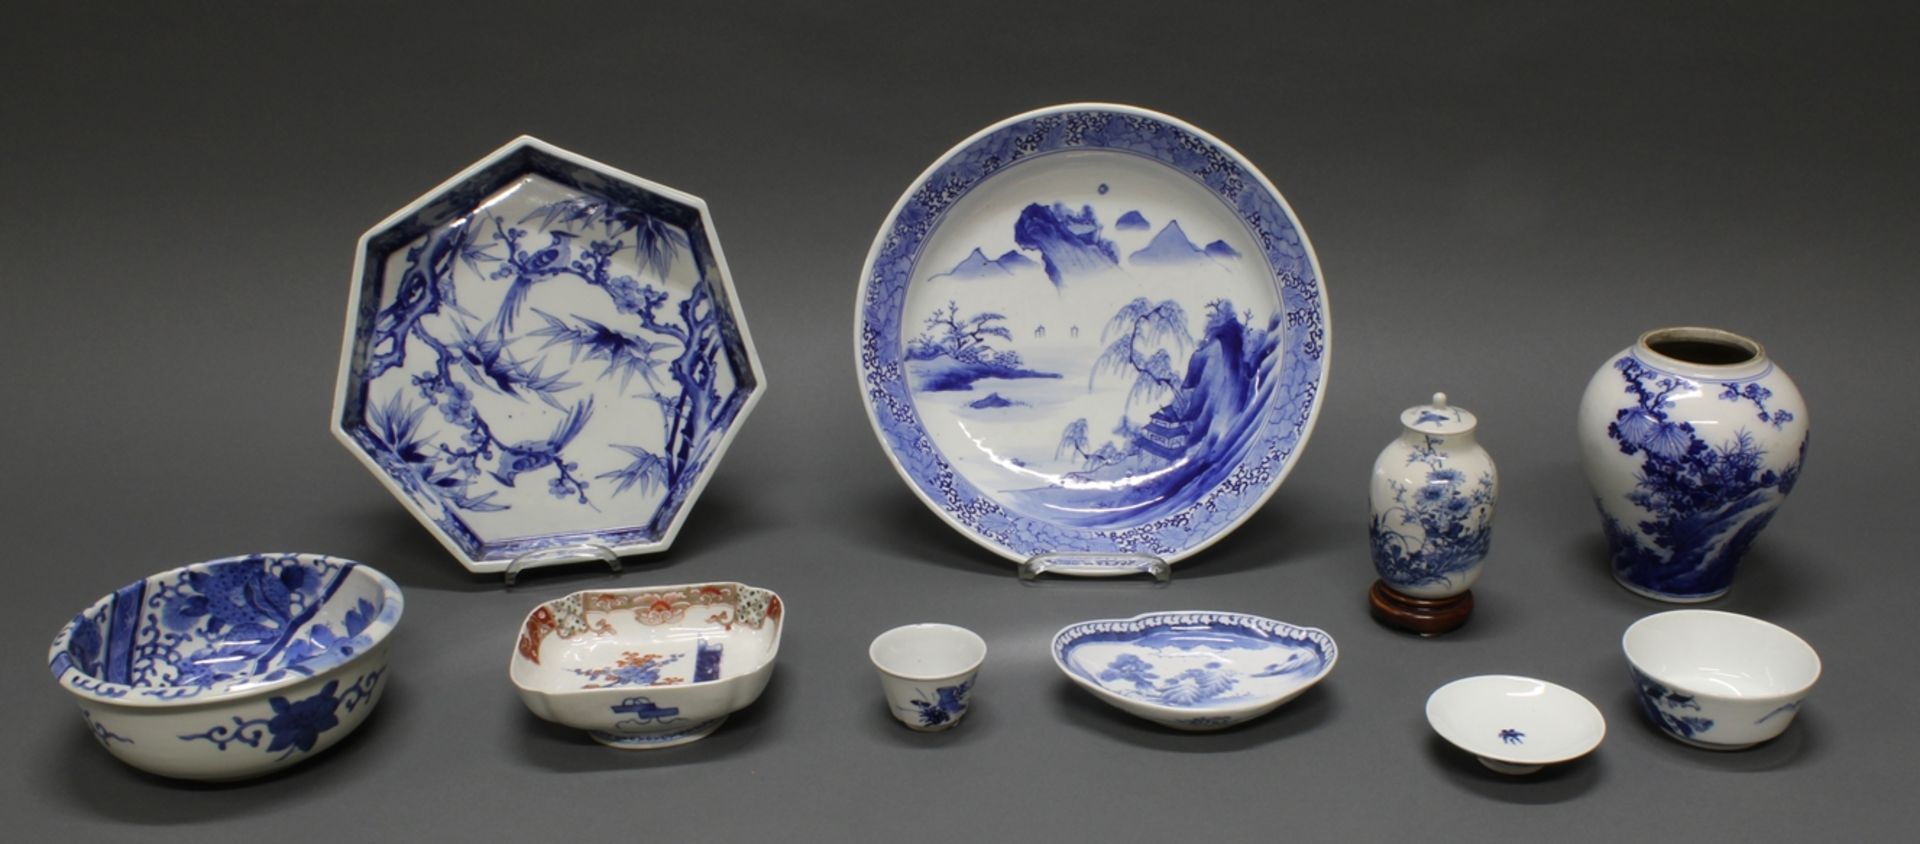 Konvolut, 9-tlg., Japan, 2. Hälfte 19. Jh., Porzellan, Arita, meist Blau-Weiß-Dekore, 3.5-16 cm hoc